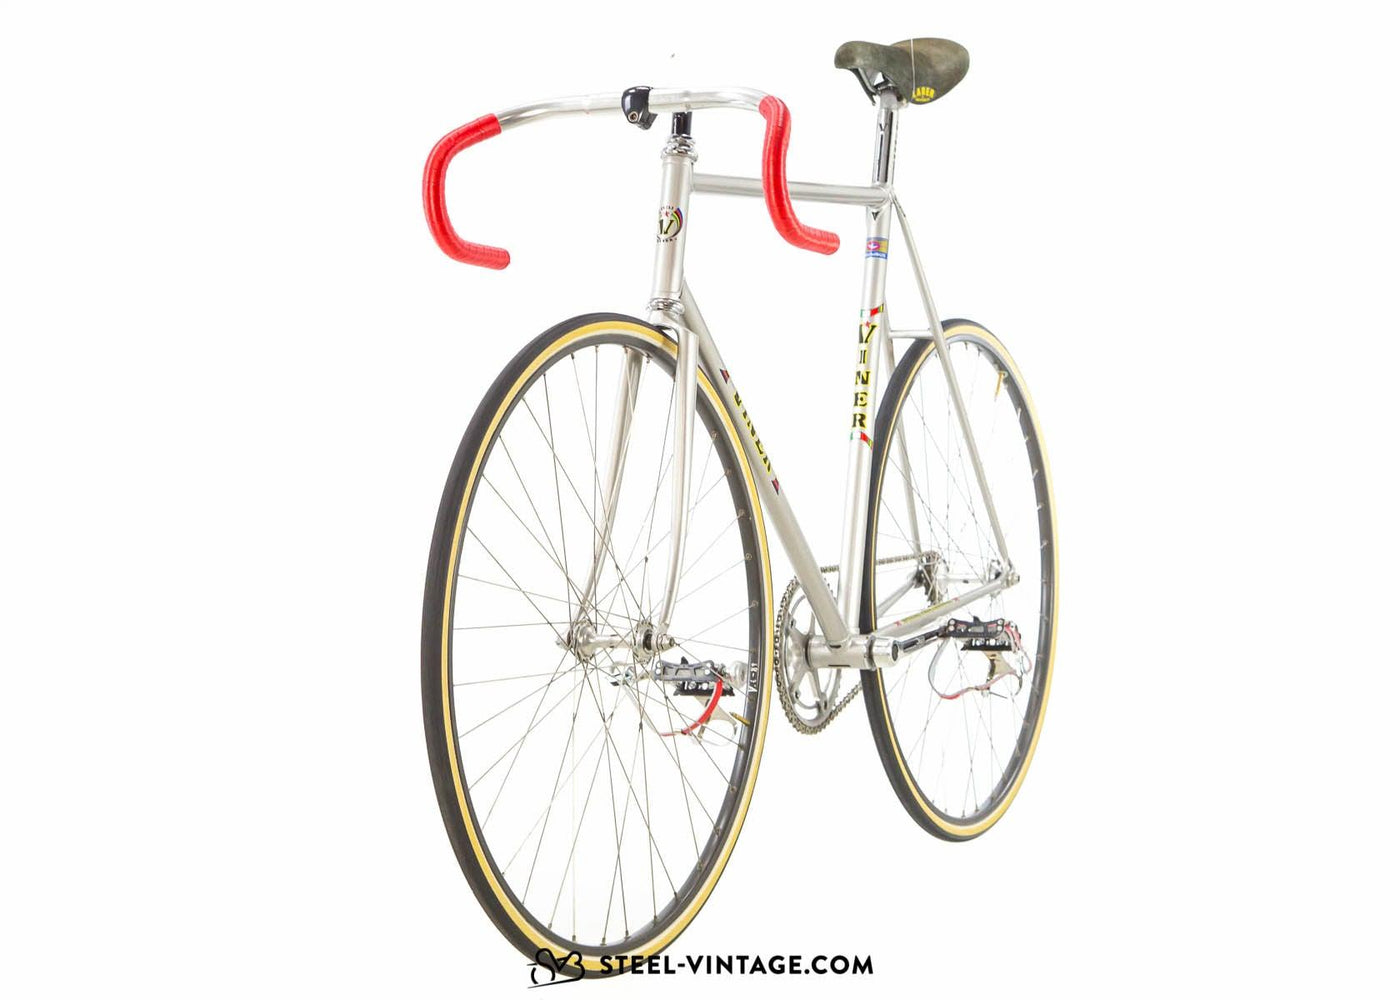 Viner Special Professional Track Bicycle 1980s - Steel Vintage Bikes